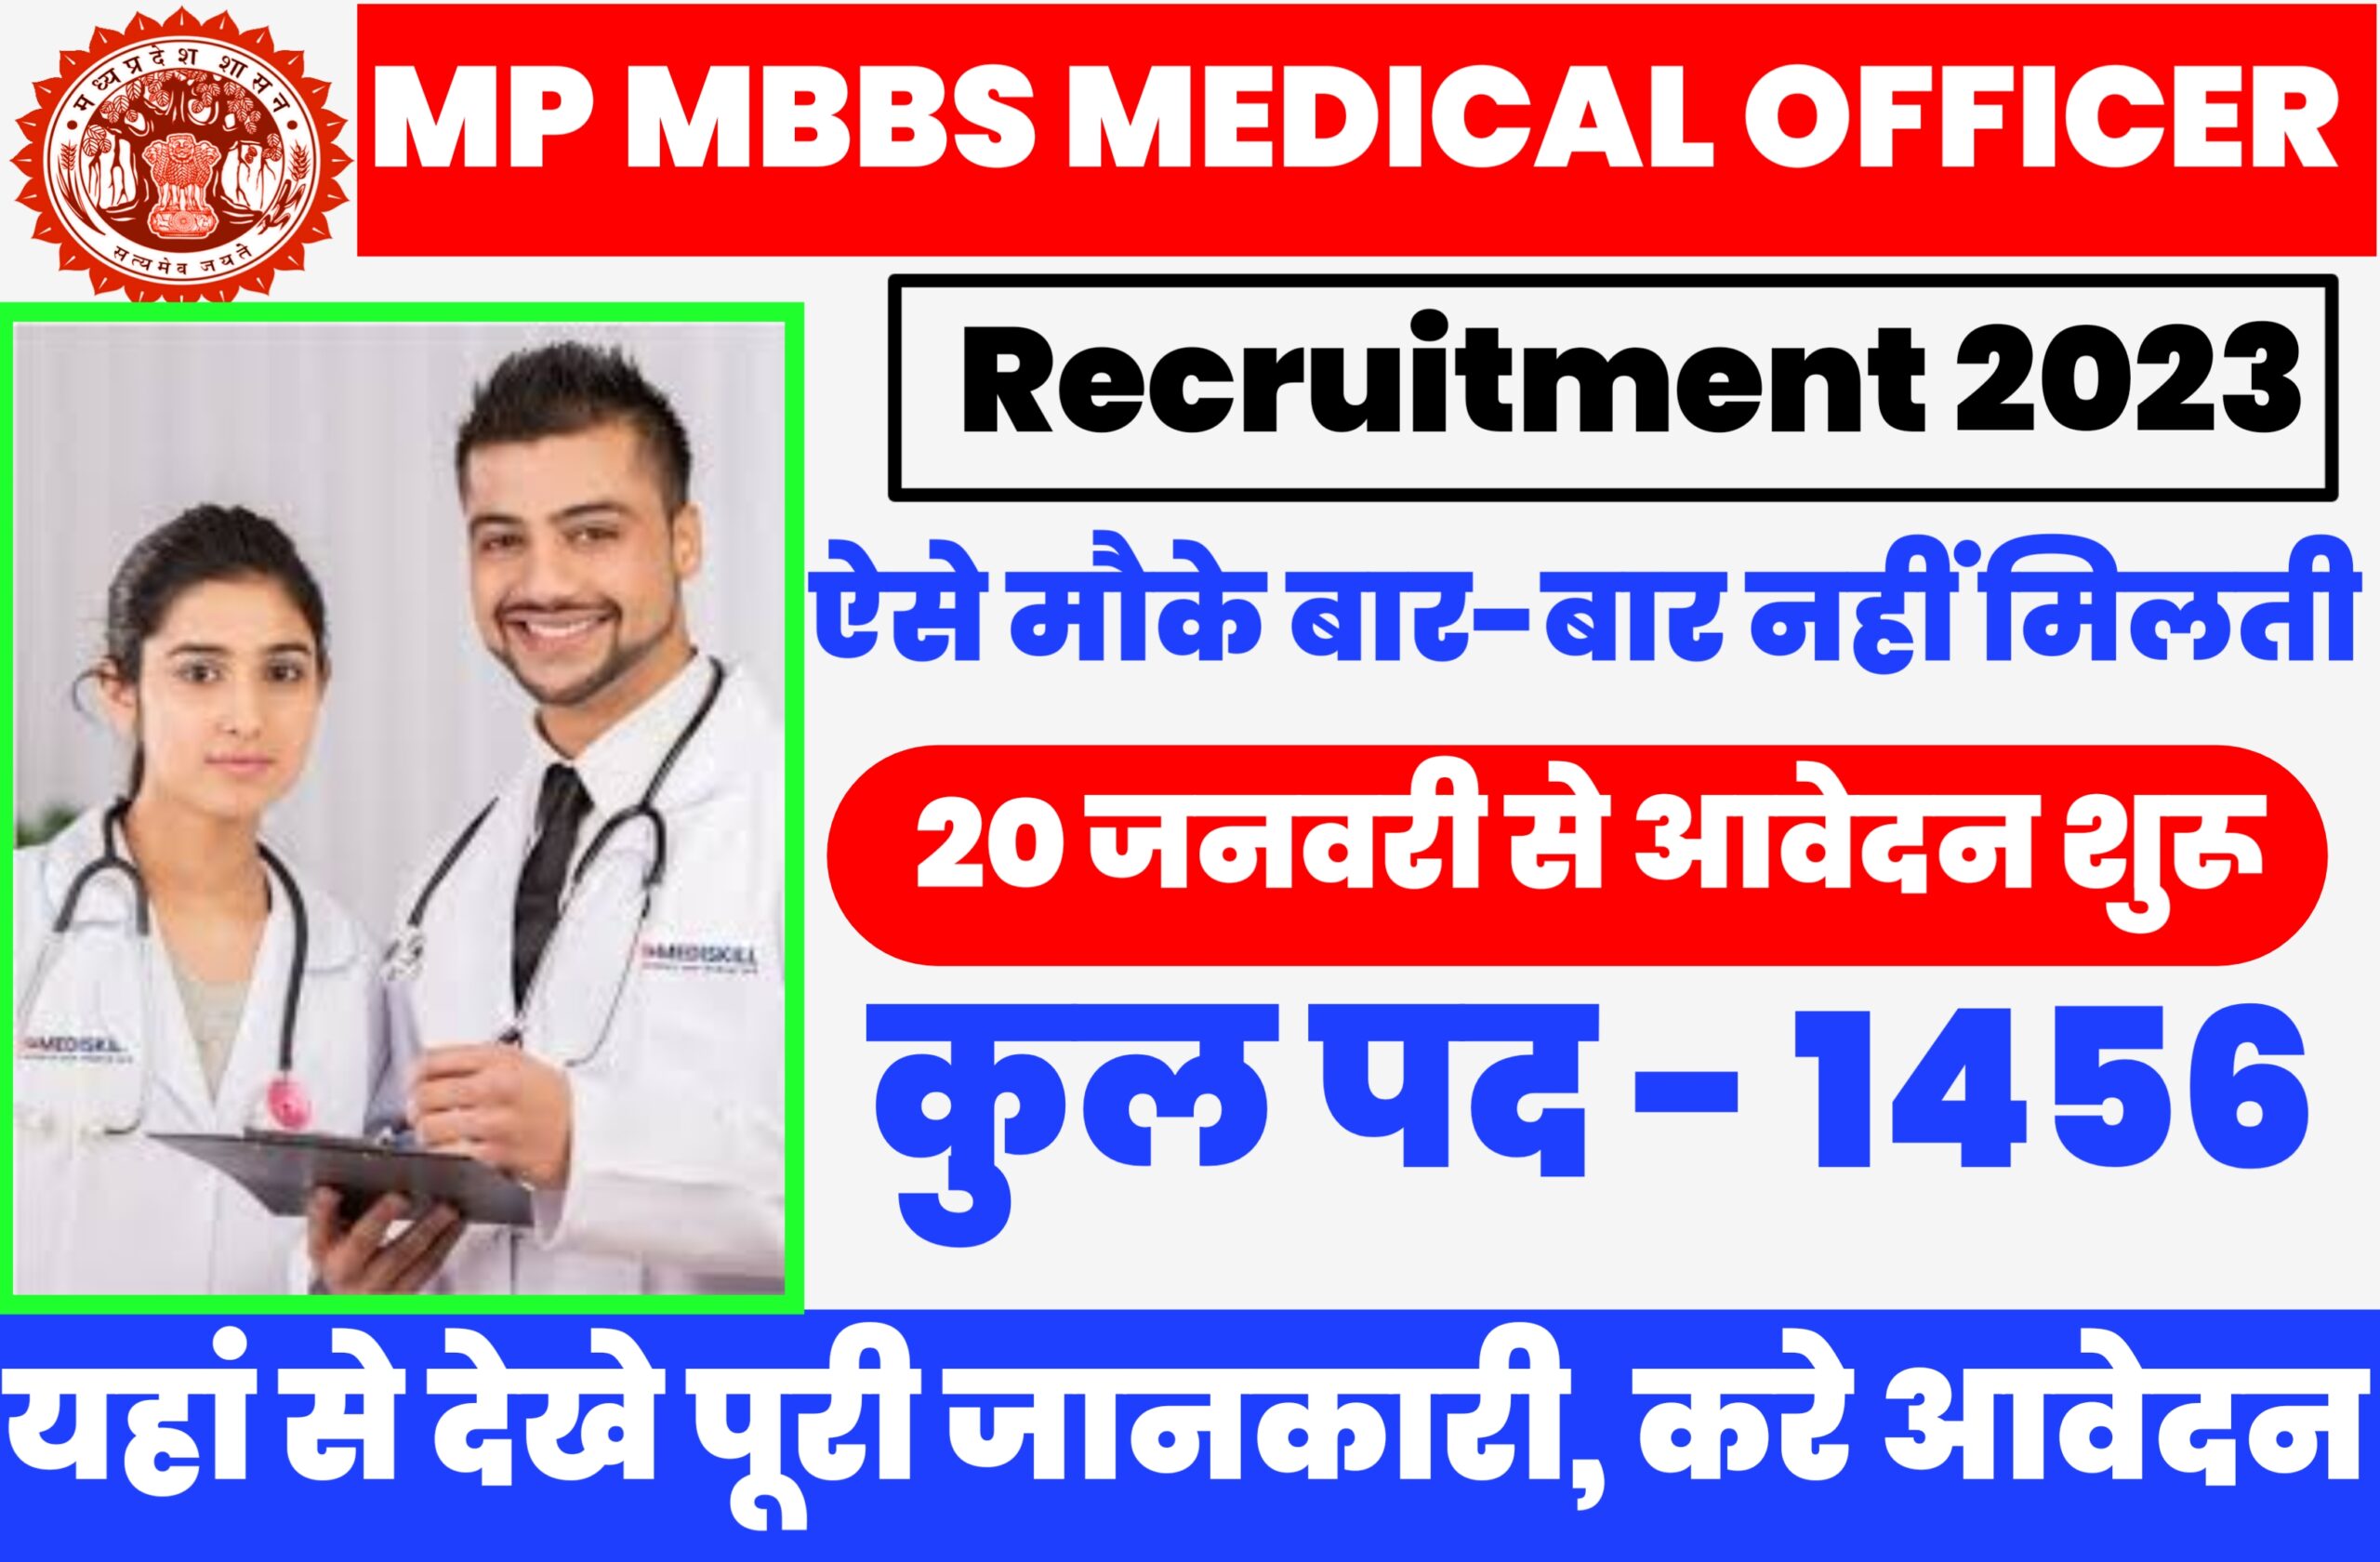 MPPSC Medical Officer Vacancy 2023